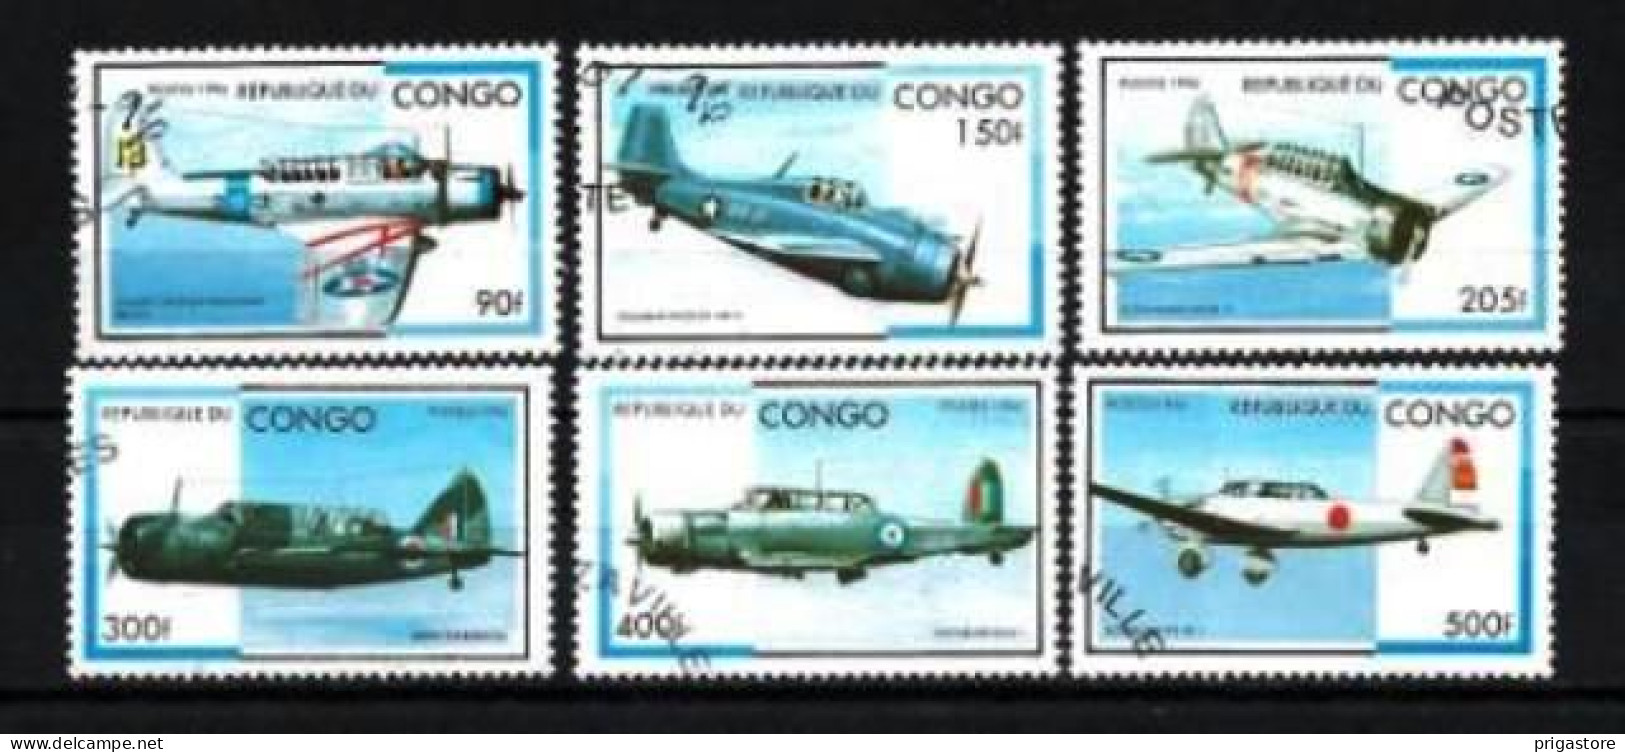 Congo 1996 Avions (39) Yvert N° 1026 N à 1026 T Oblitéré Used - Afgestempeld